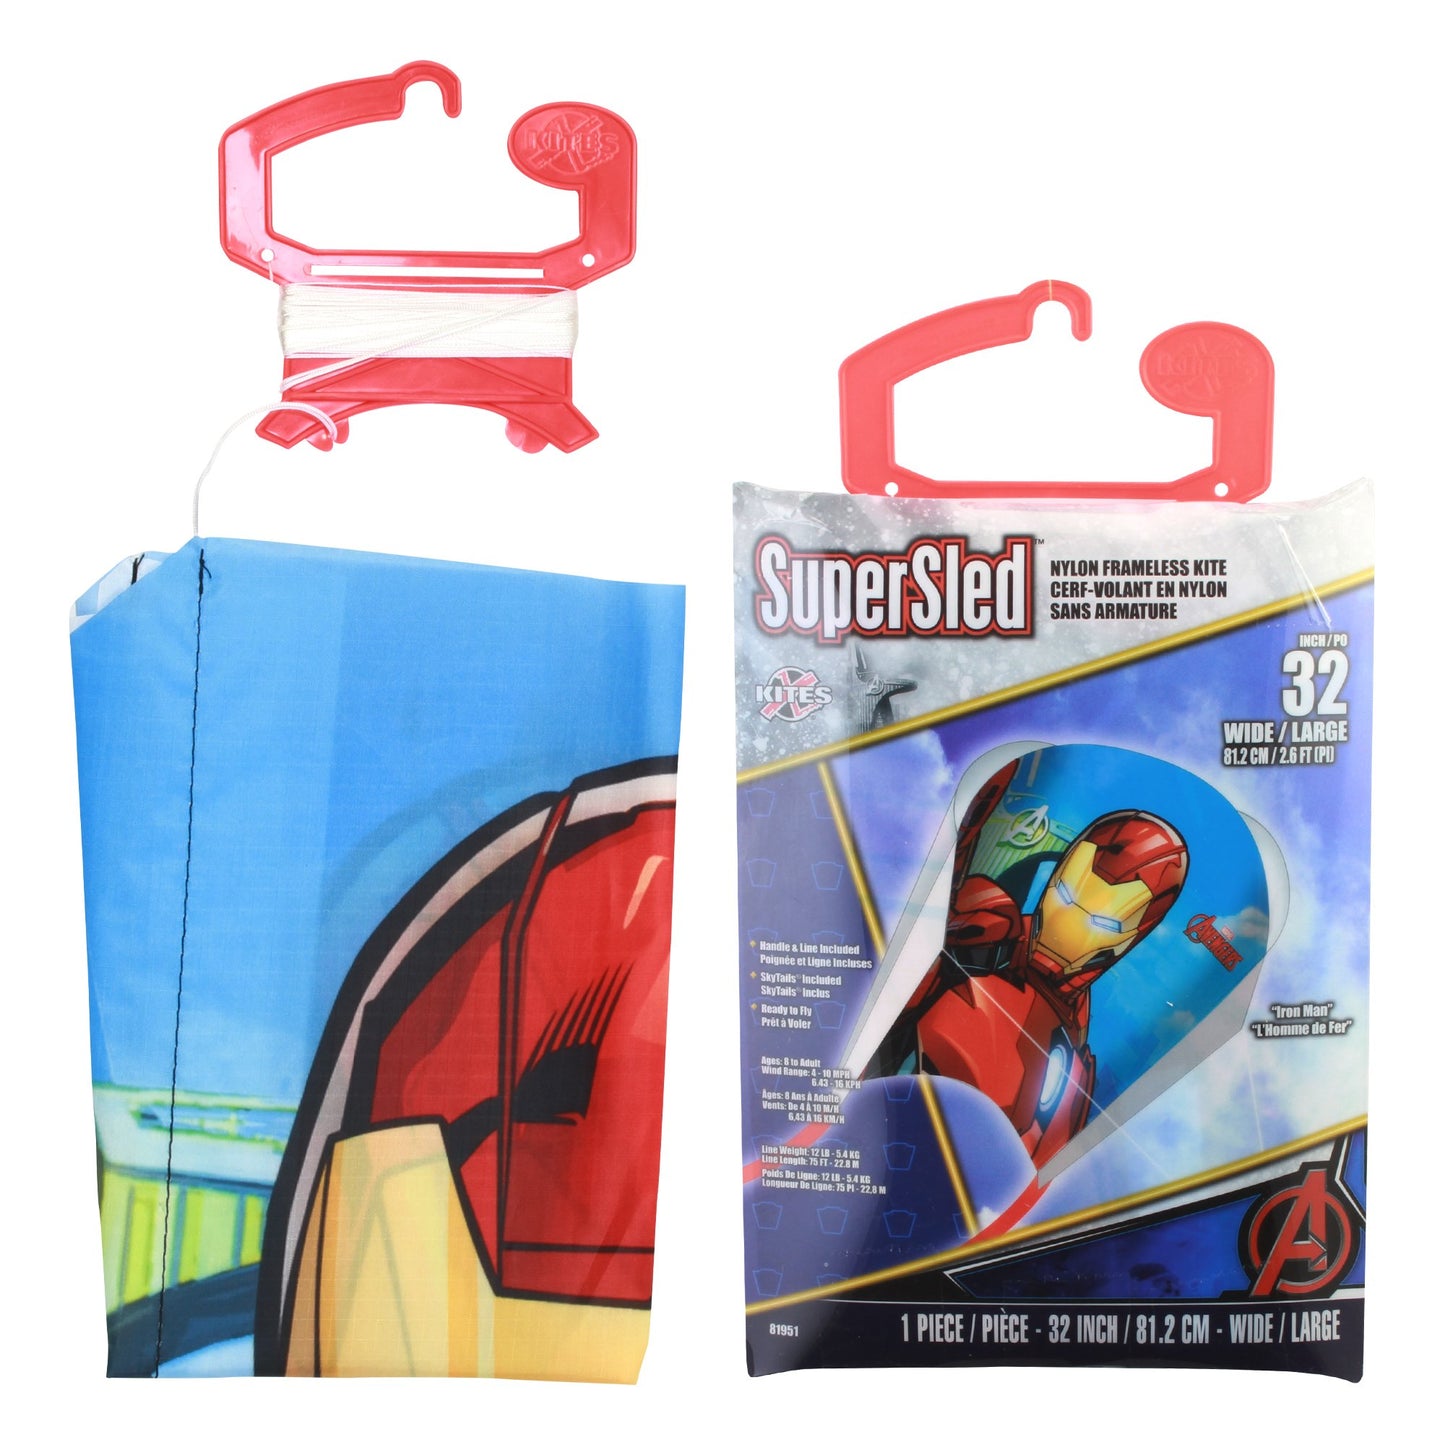 X Kites FaceKites Avengers Iron Man + X Kites SuperSled Avengers Iron Man Nylon Kite Bundle Product Image